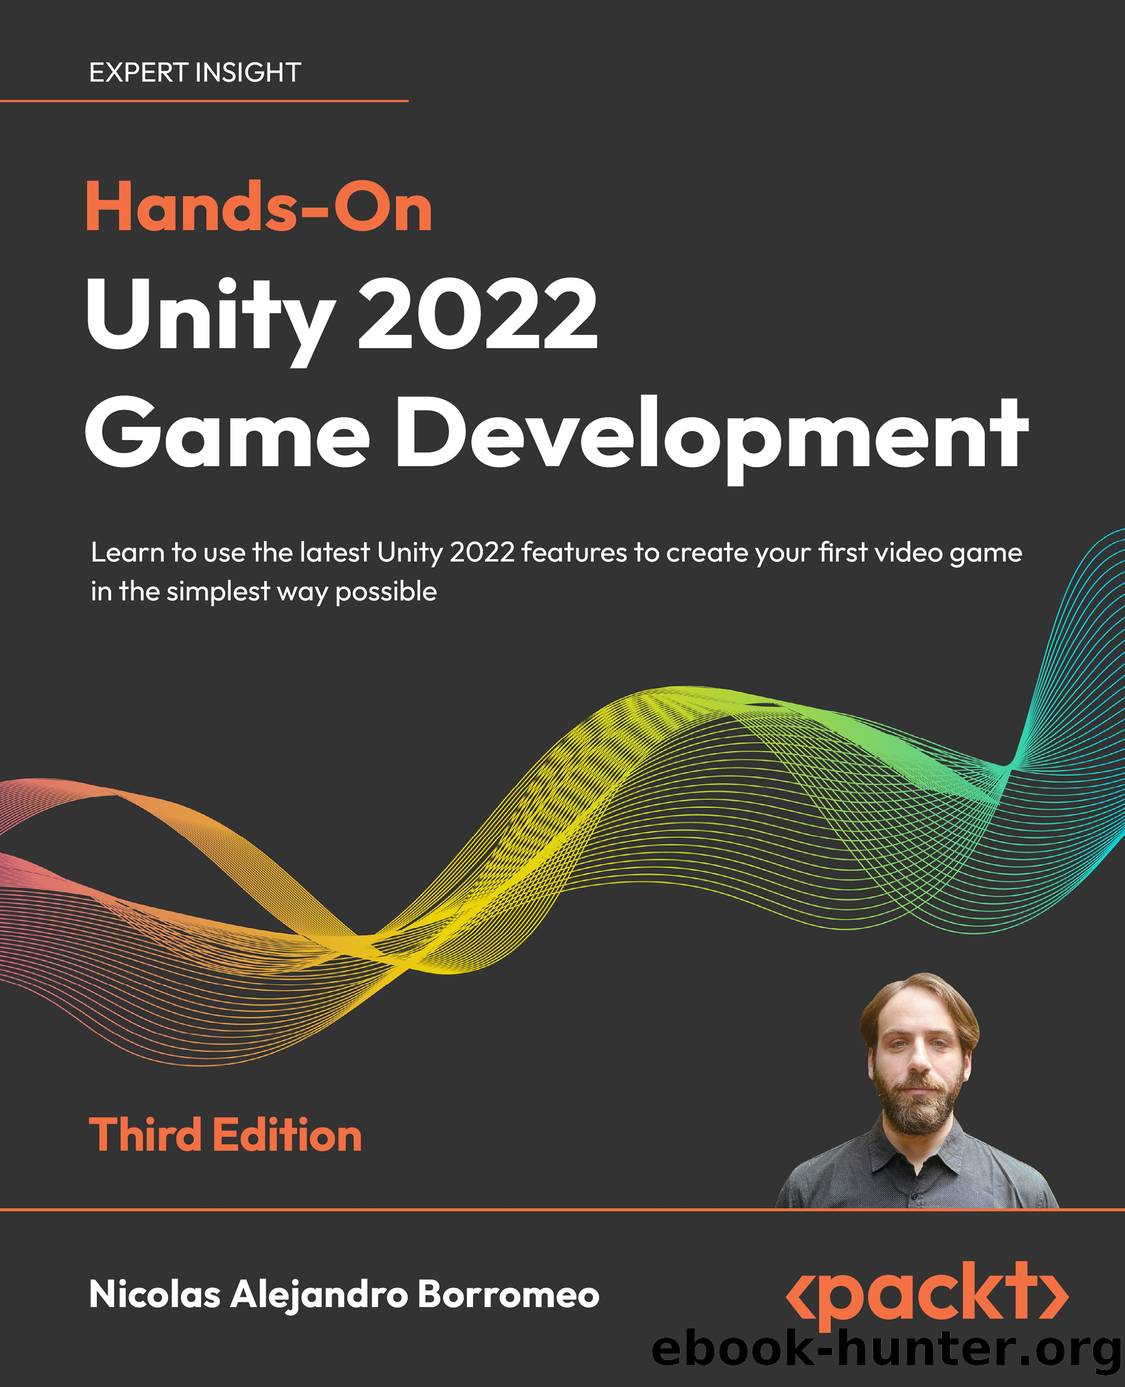 Hands-On Unity 2022 Game Development - Third Edition by Nicolas Alejandro Borromeo